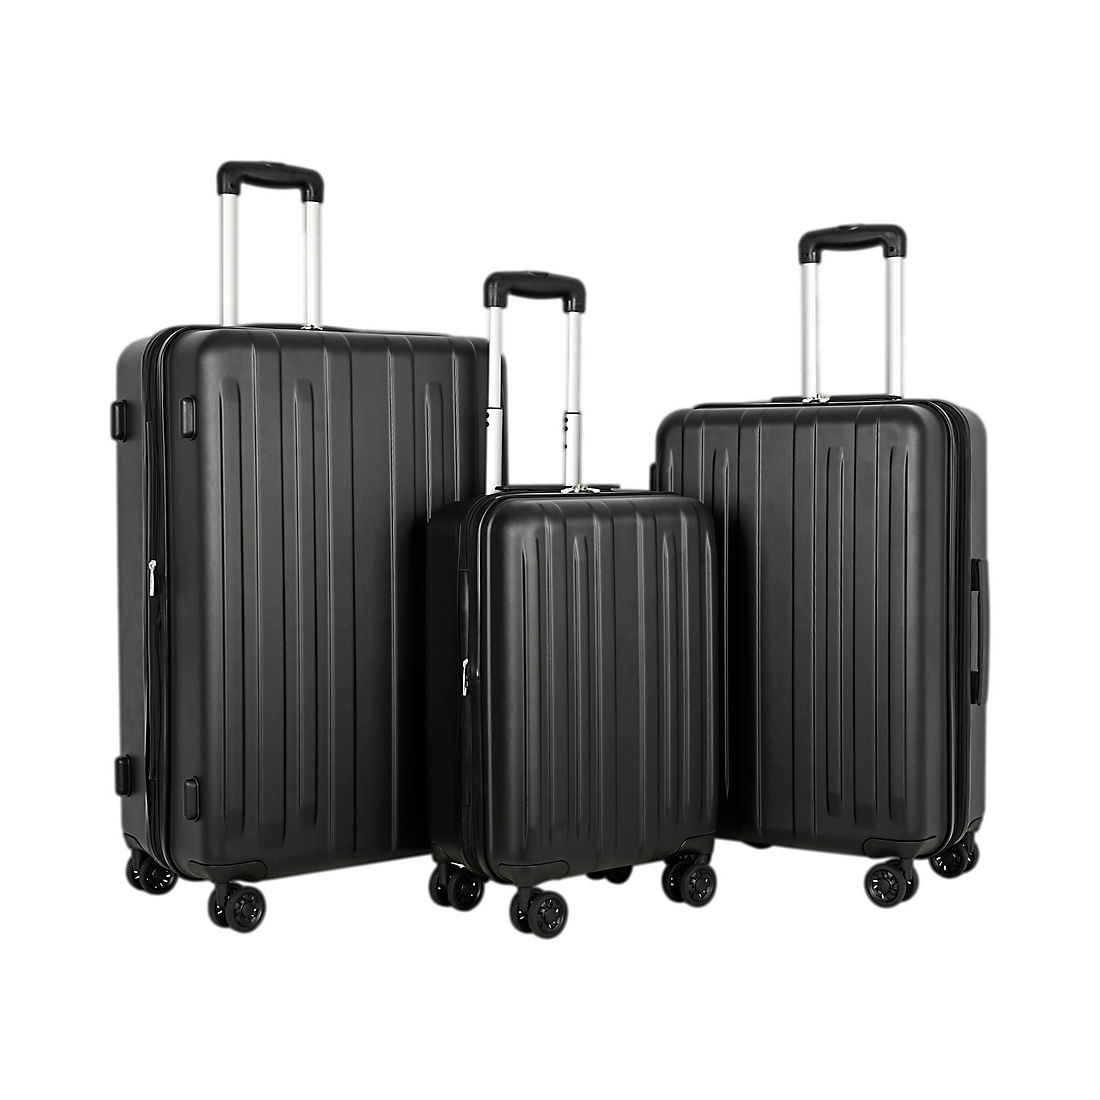 Adventurer 3 Piece Luggage Suitcase Set Lightweight 4 Wheel ABS Hard Shell Black 